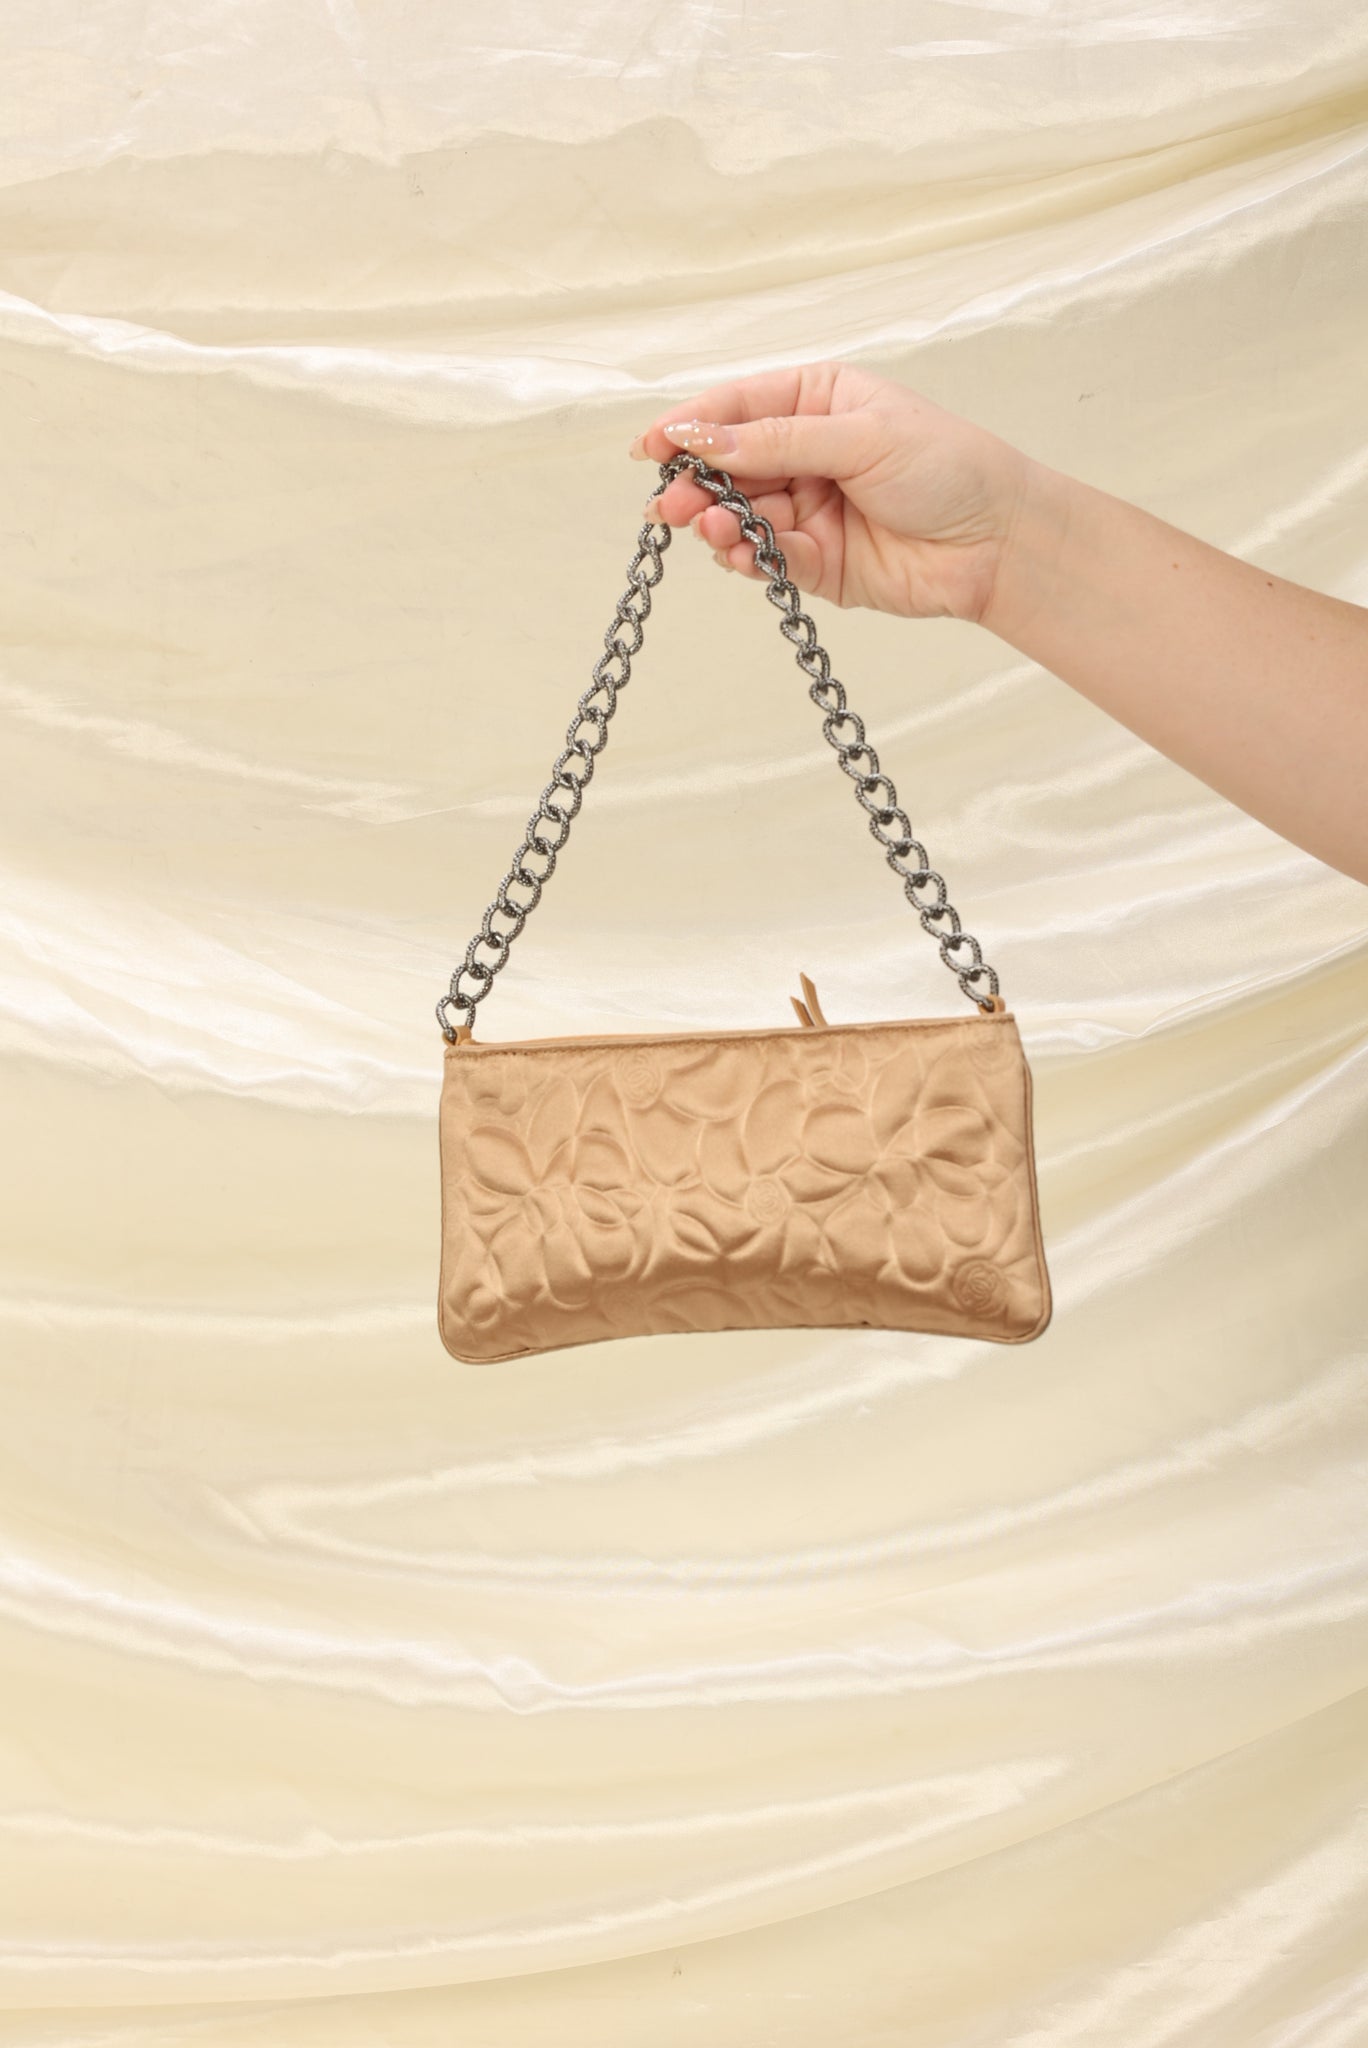 Chanel Camellia Satin Pochette Bag